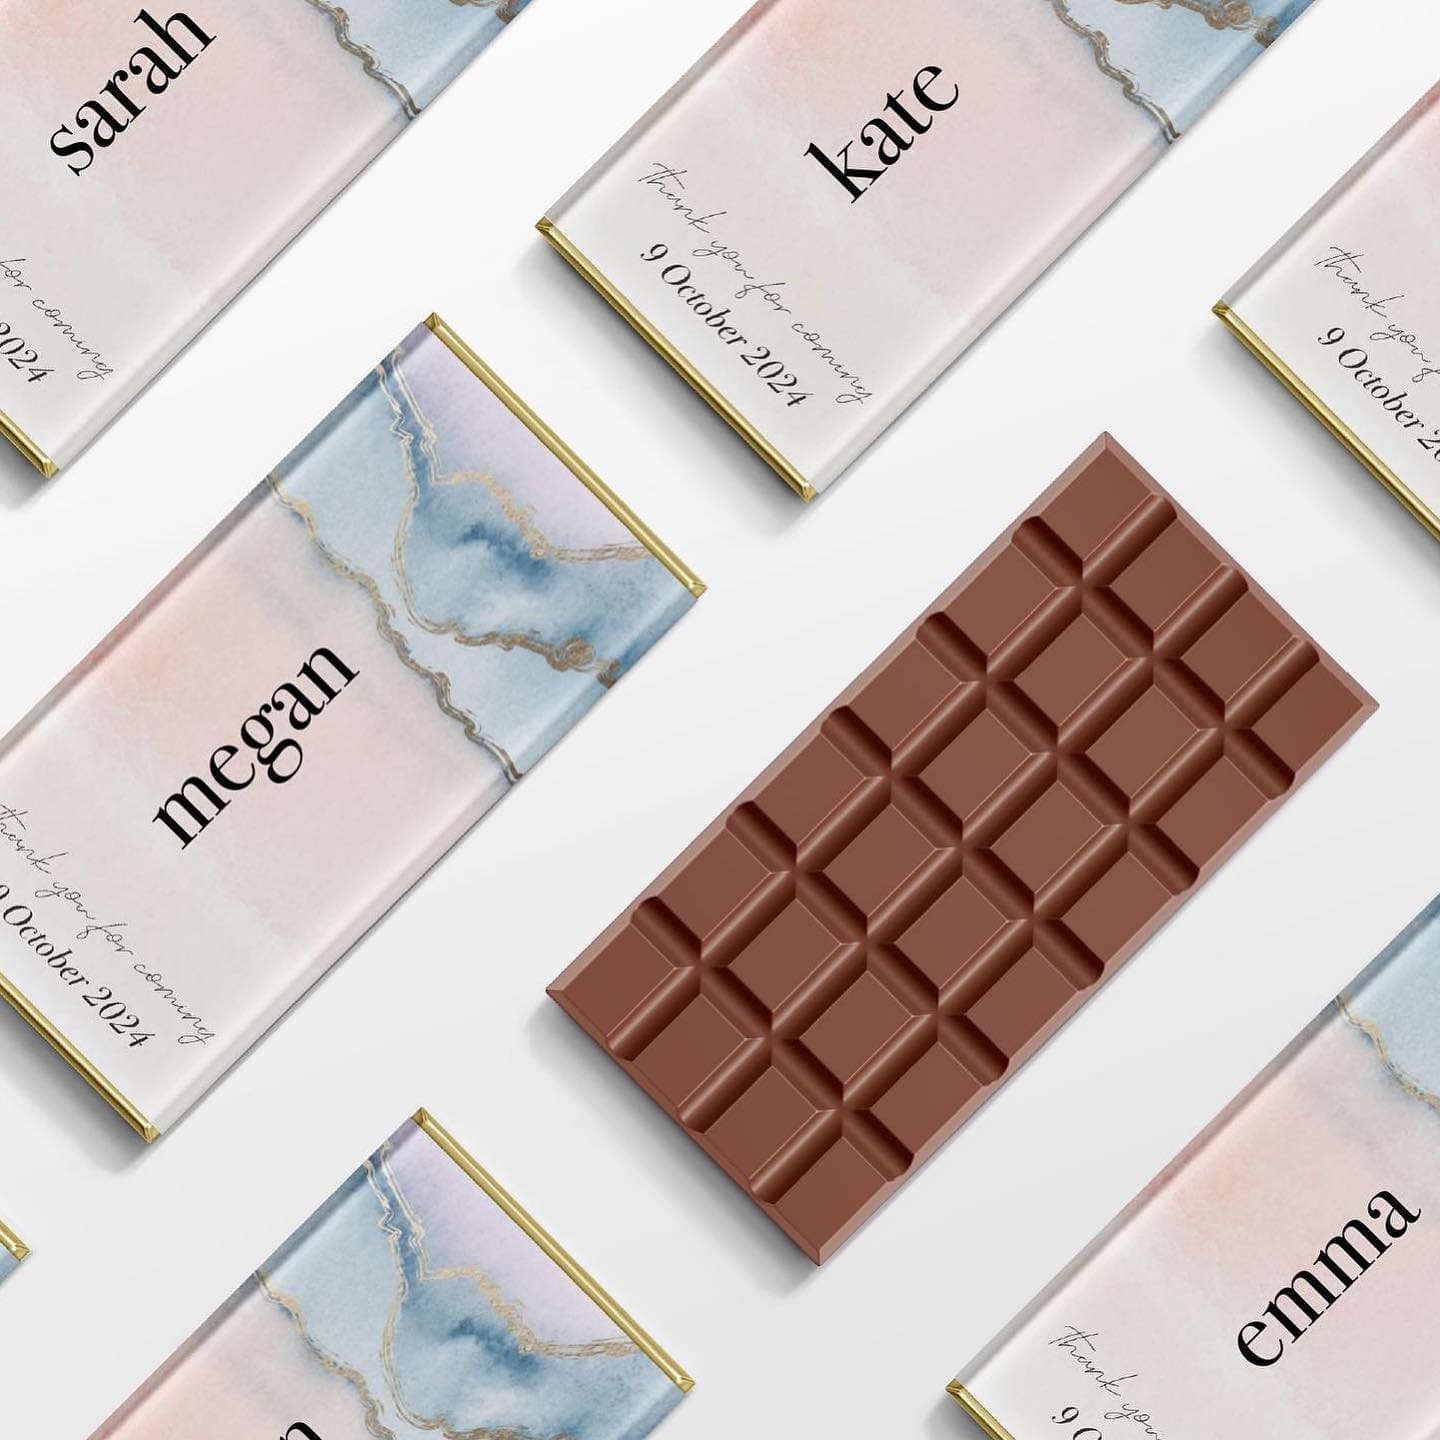 Personalised Chocolate Bars Australia